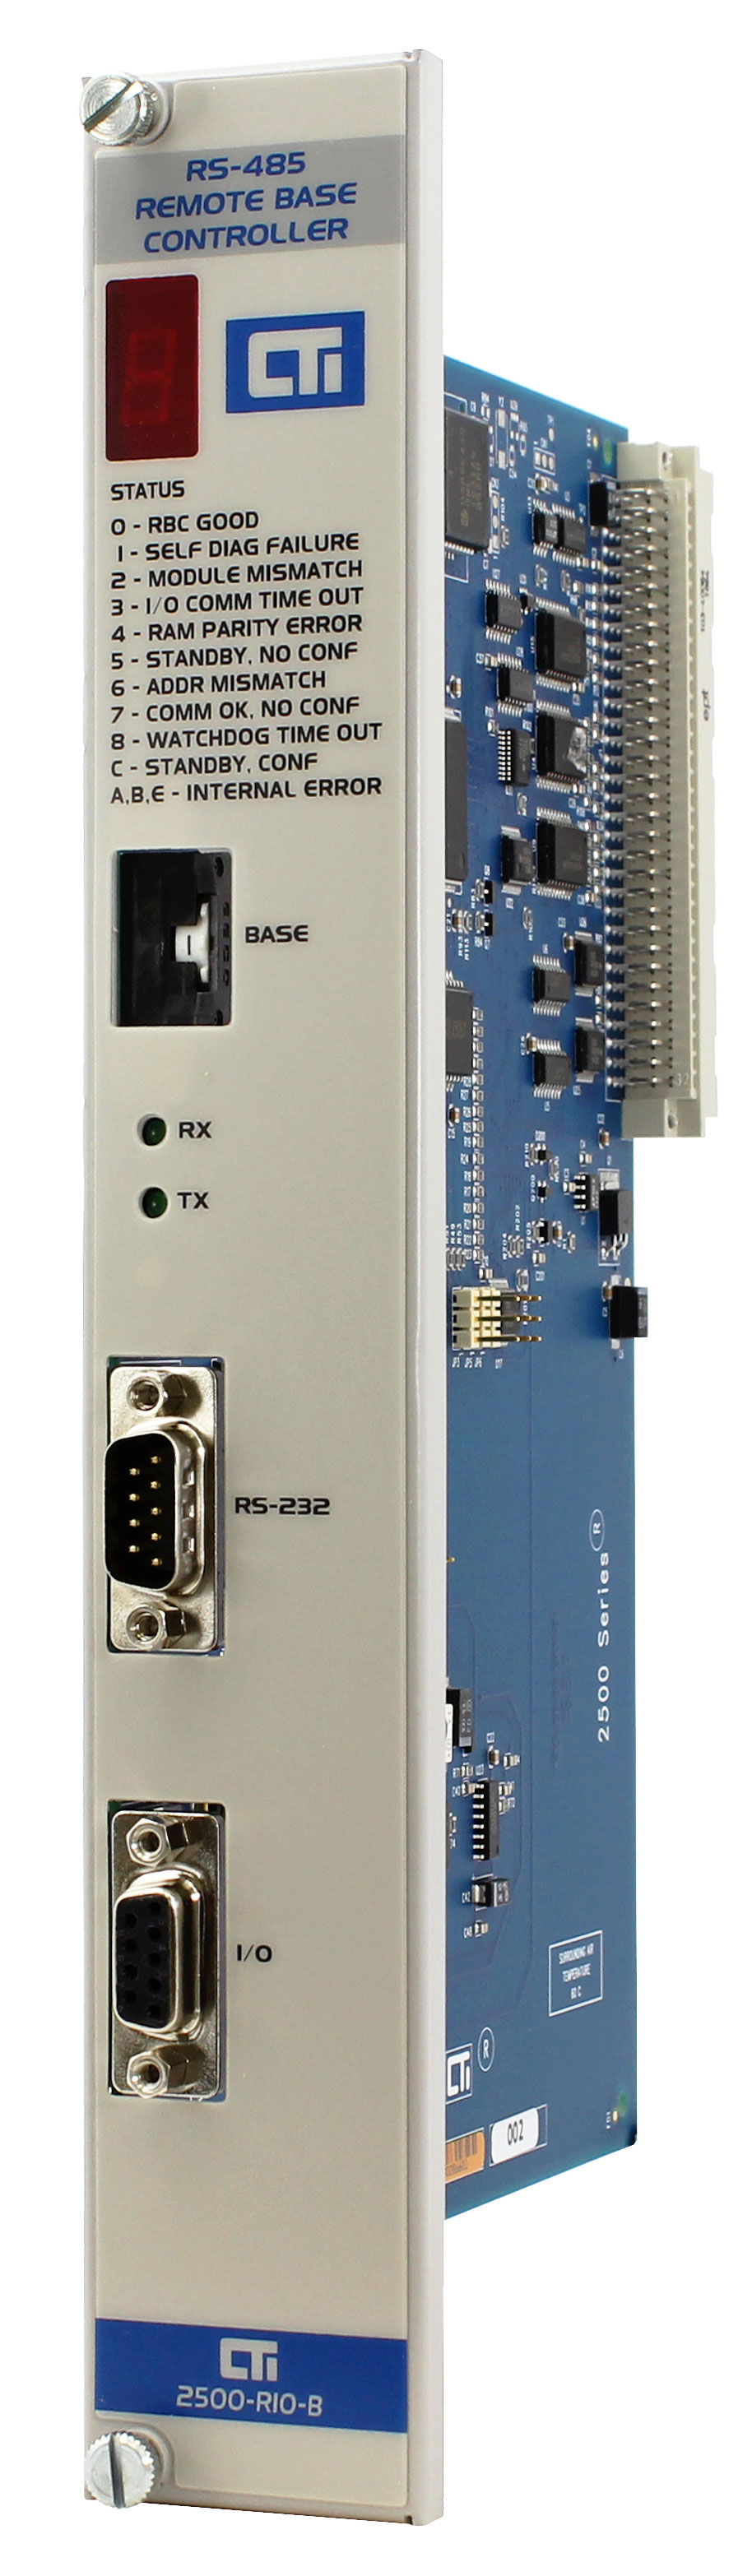 2500-RIO-B RS485 Remote Base Controller